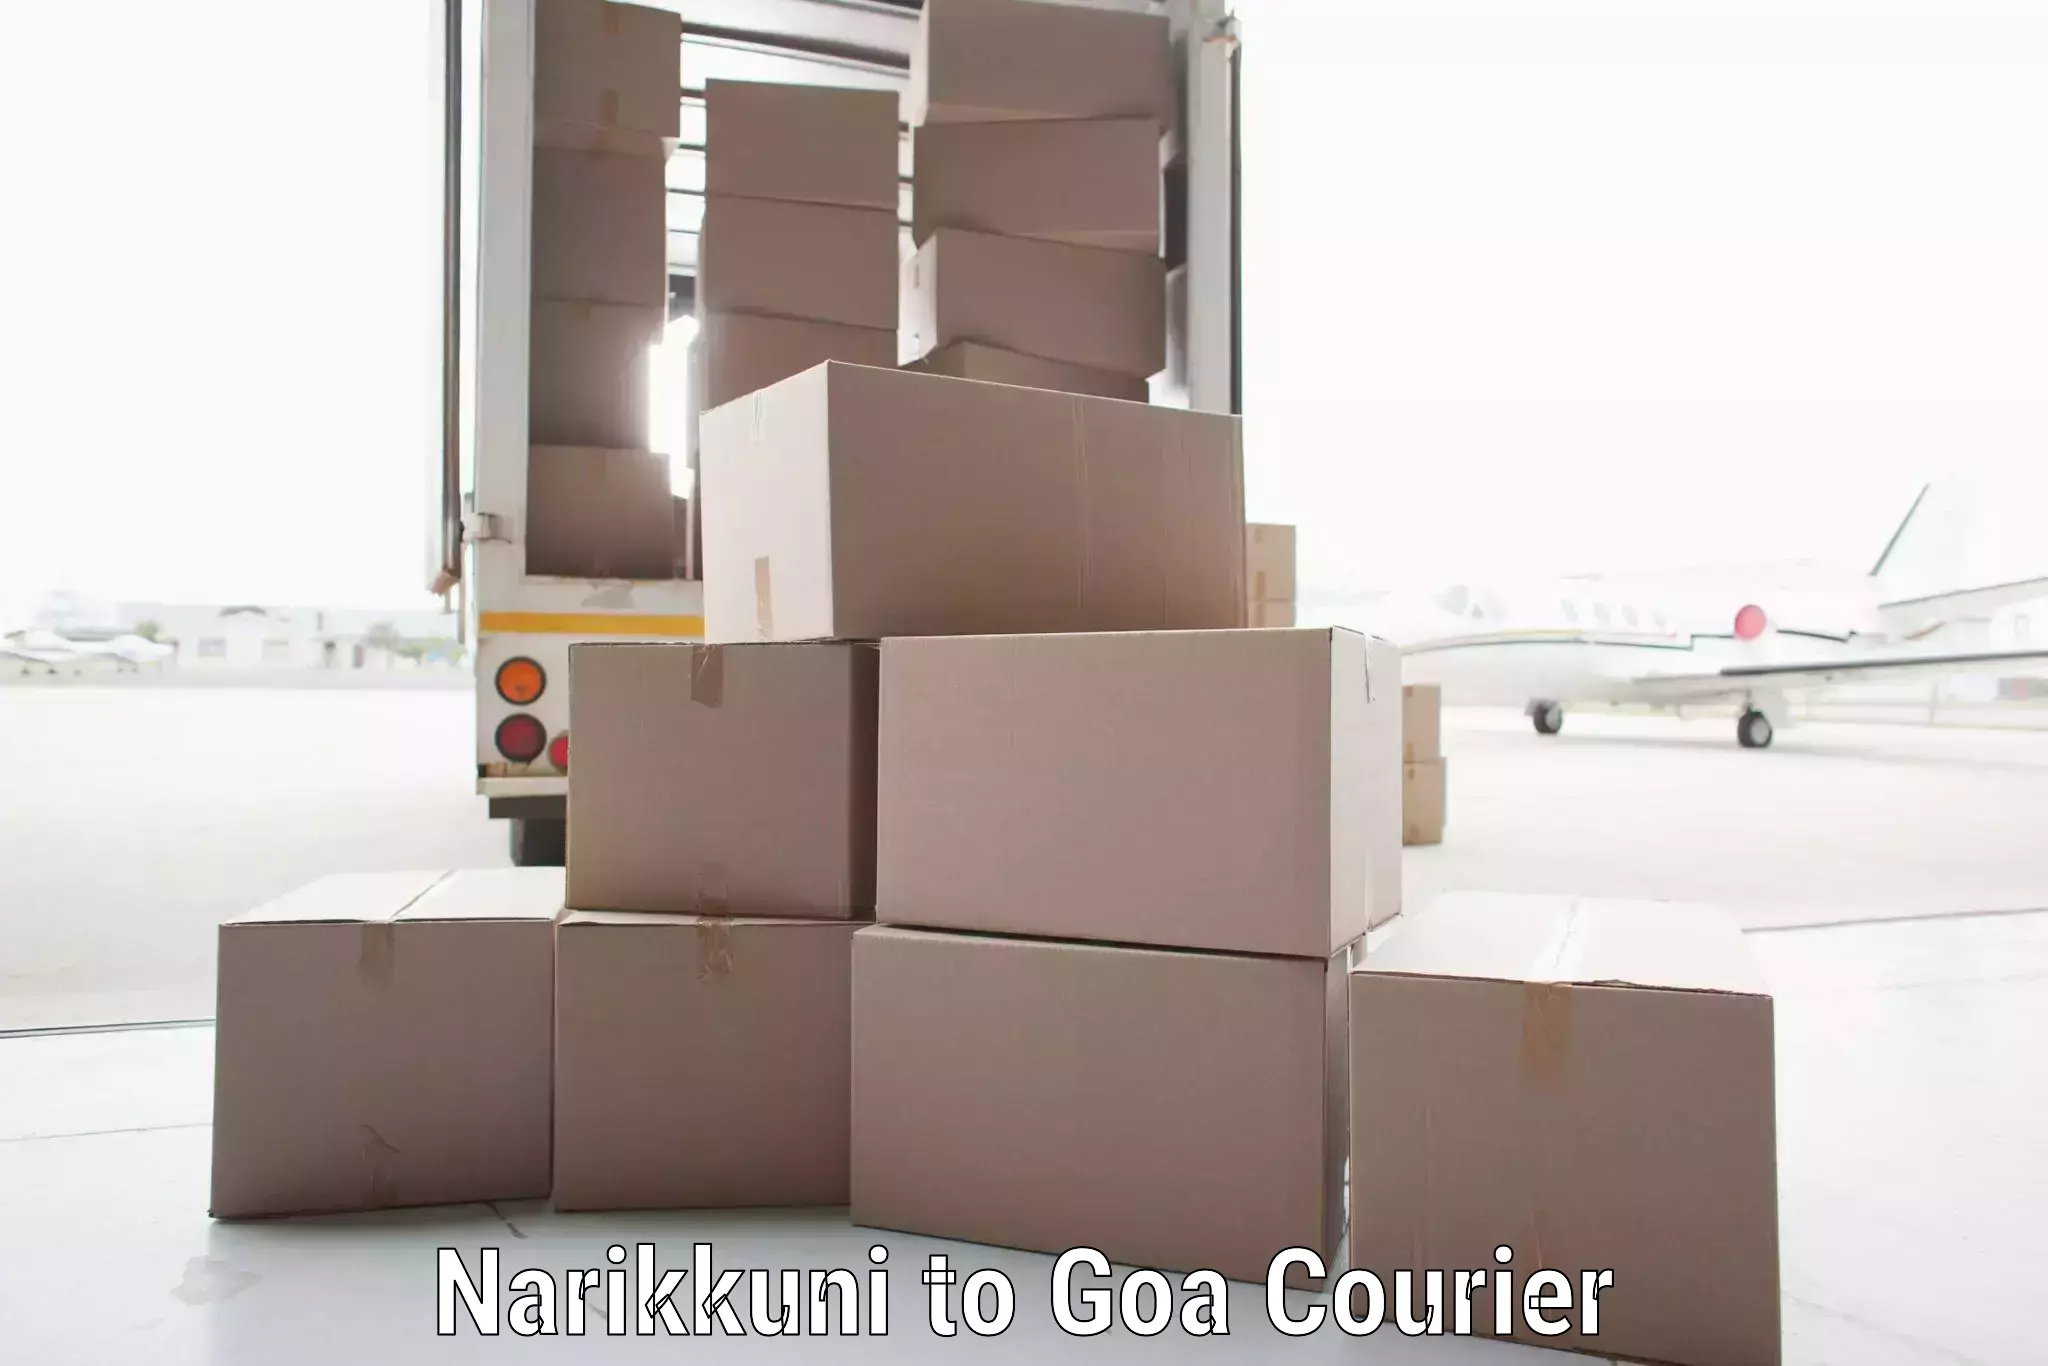 Cash on delivery service Narikkuni to Goa